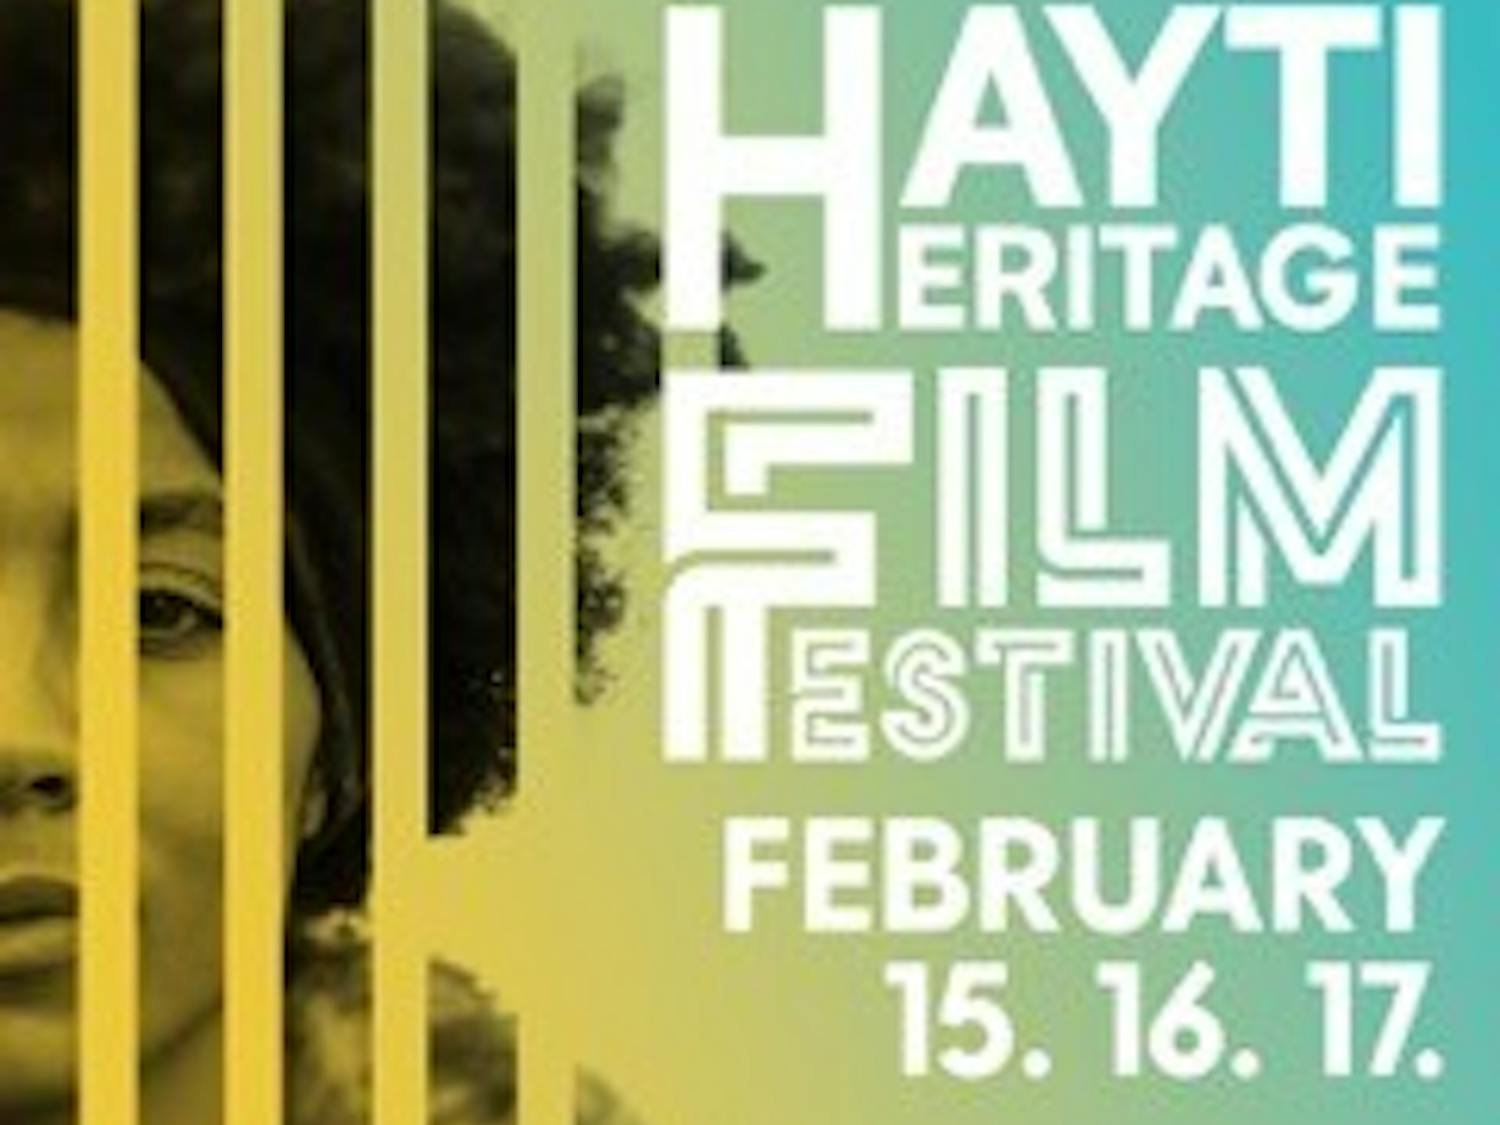 Hayti Heritage Film Festival